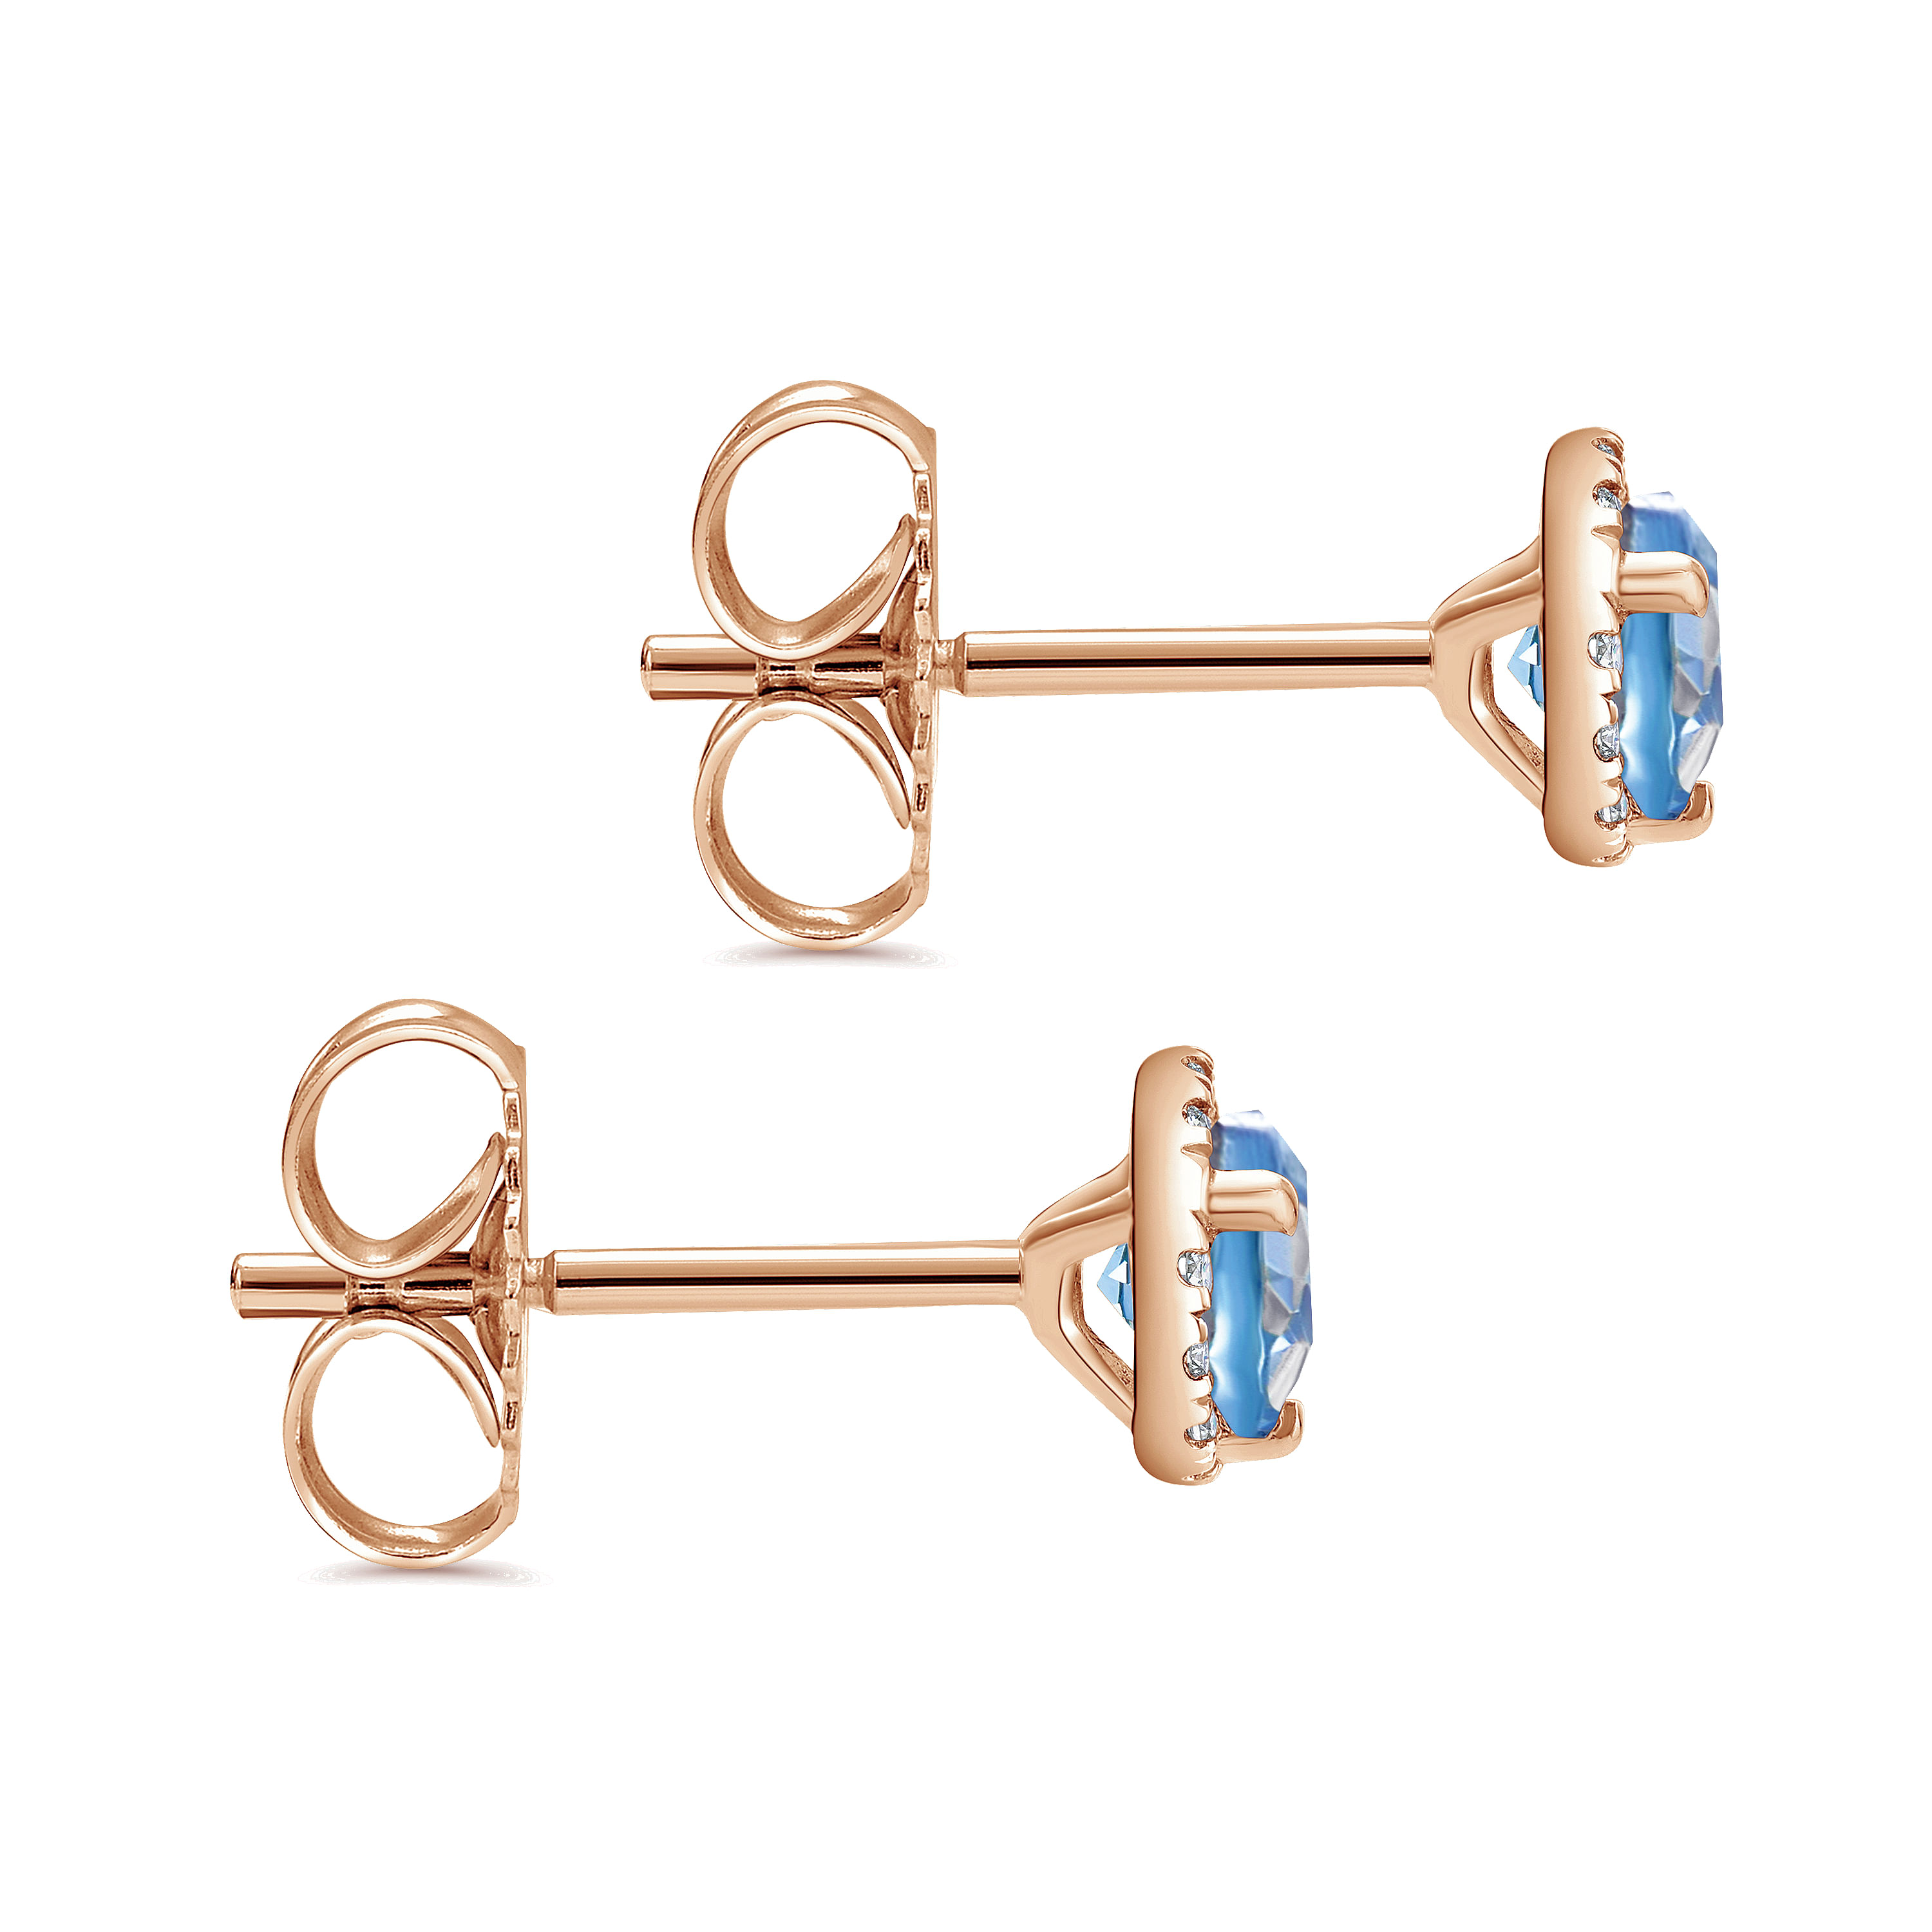 14k Rose Gold Round Cut Diamond Halo & Swiss Blue Topaz Stud Earrings